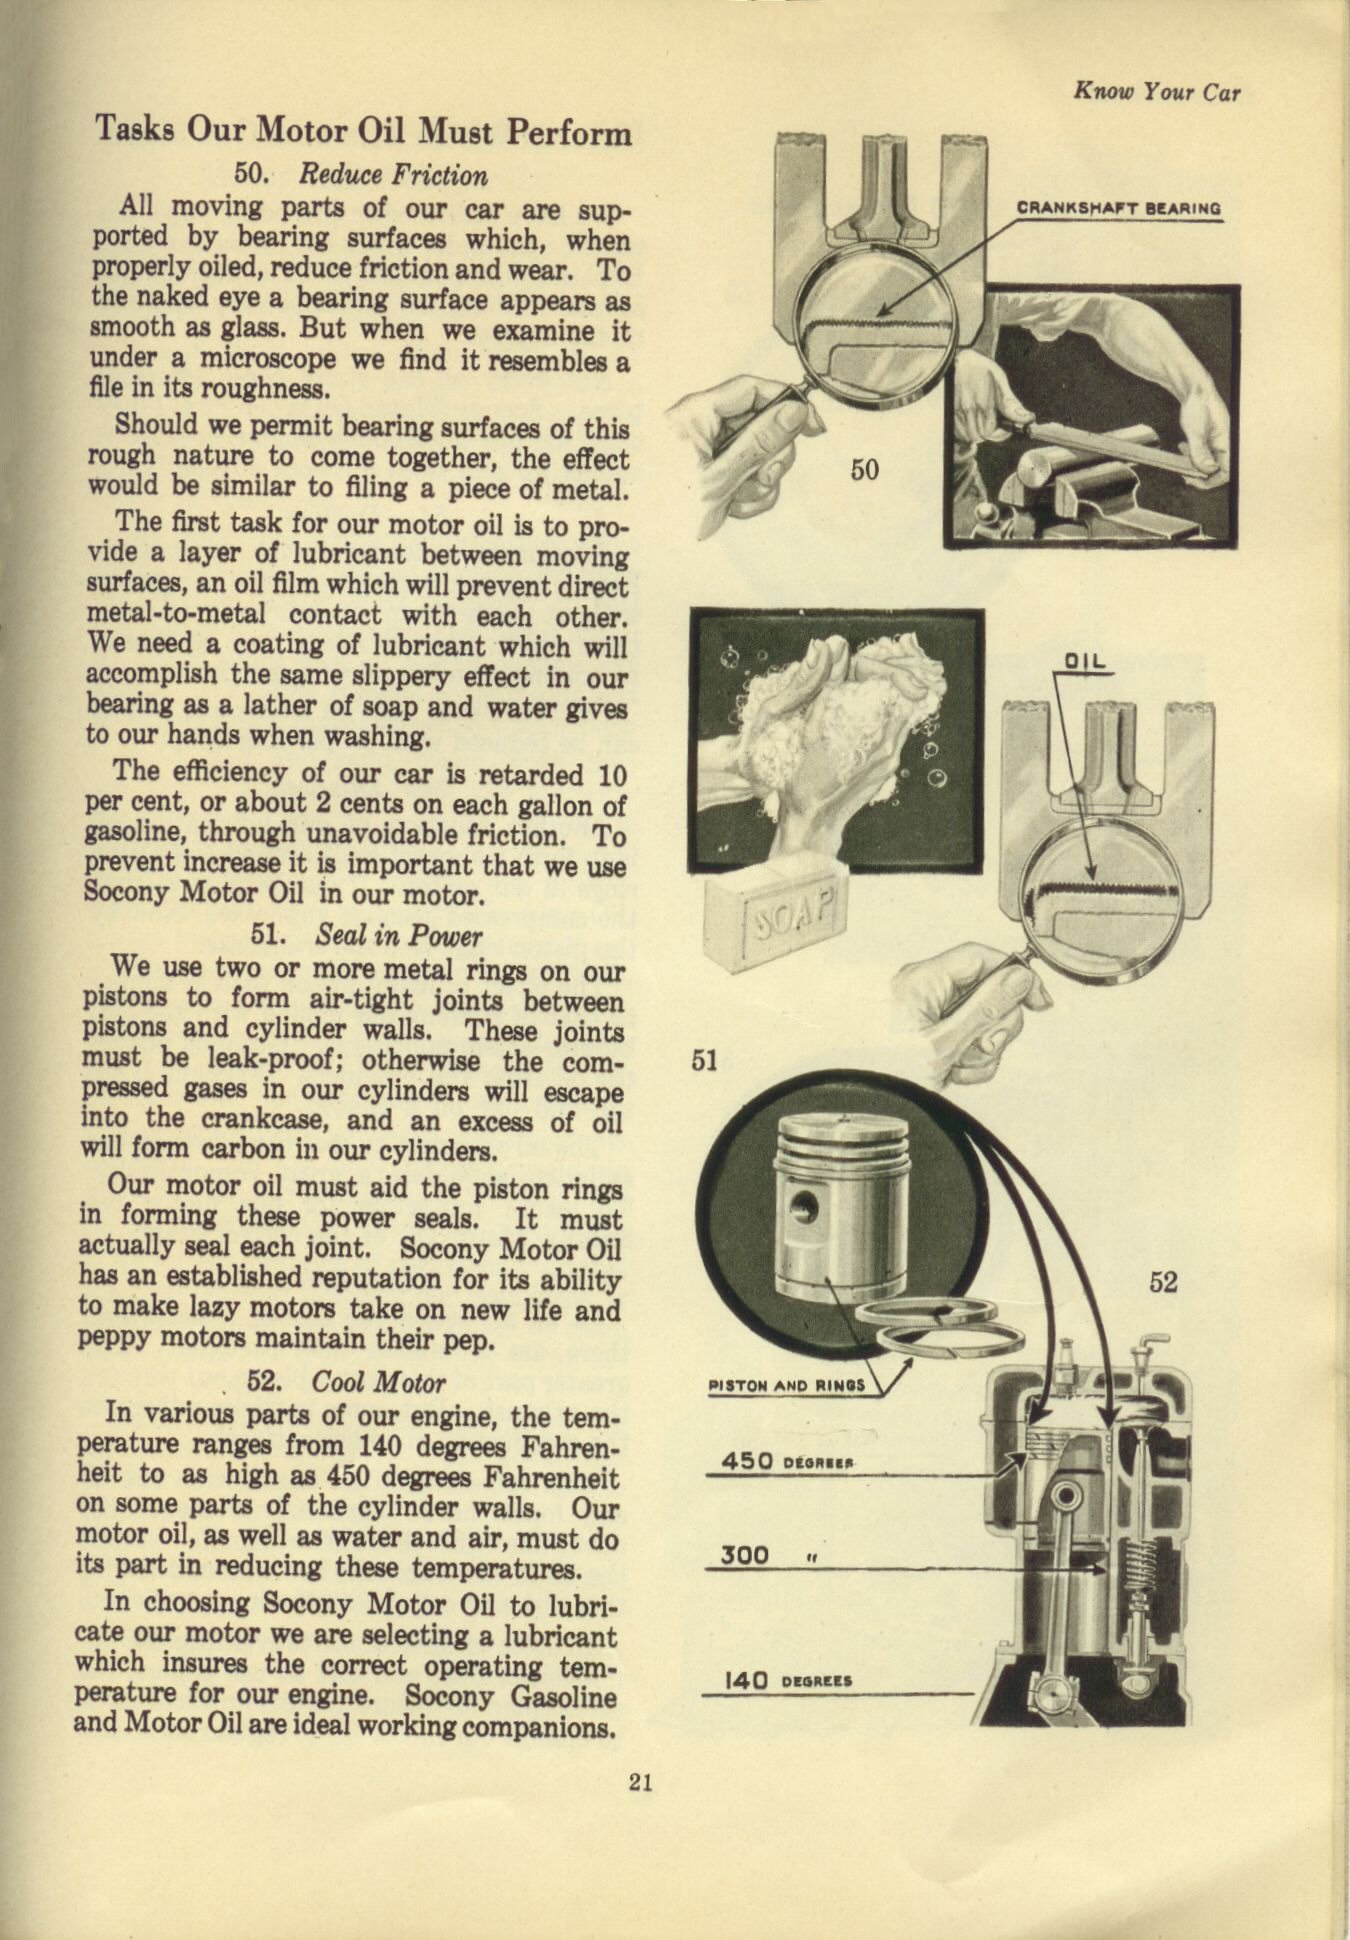 1928 Know Your Car Handbook Page 22